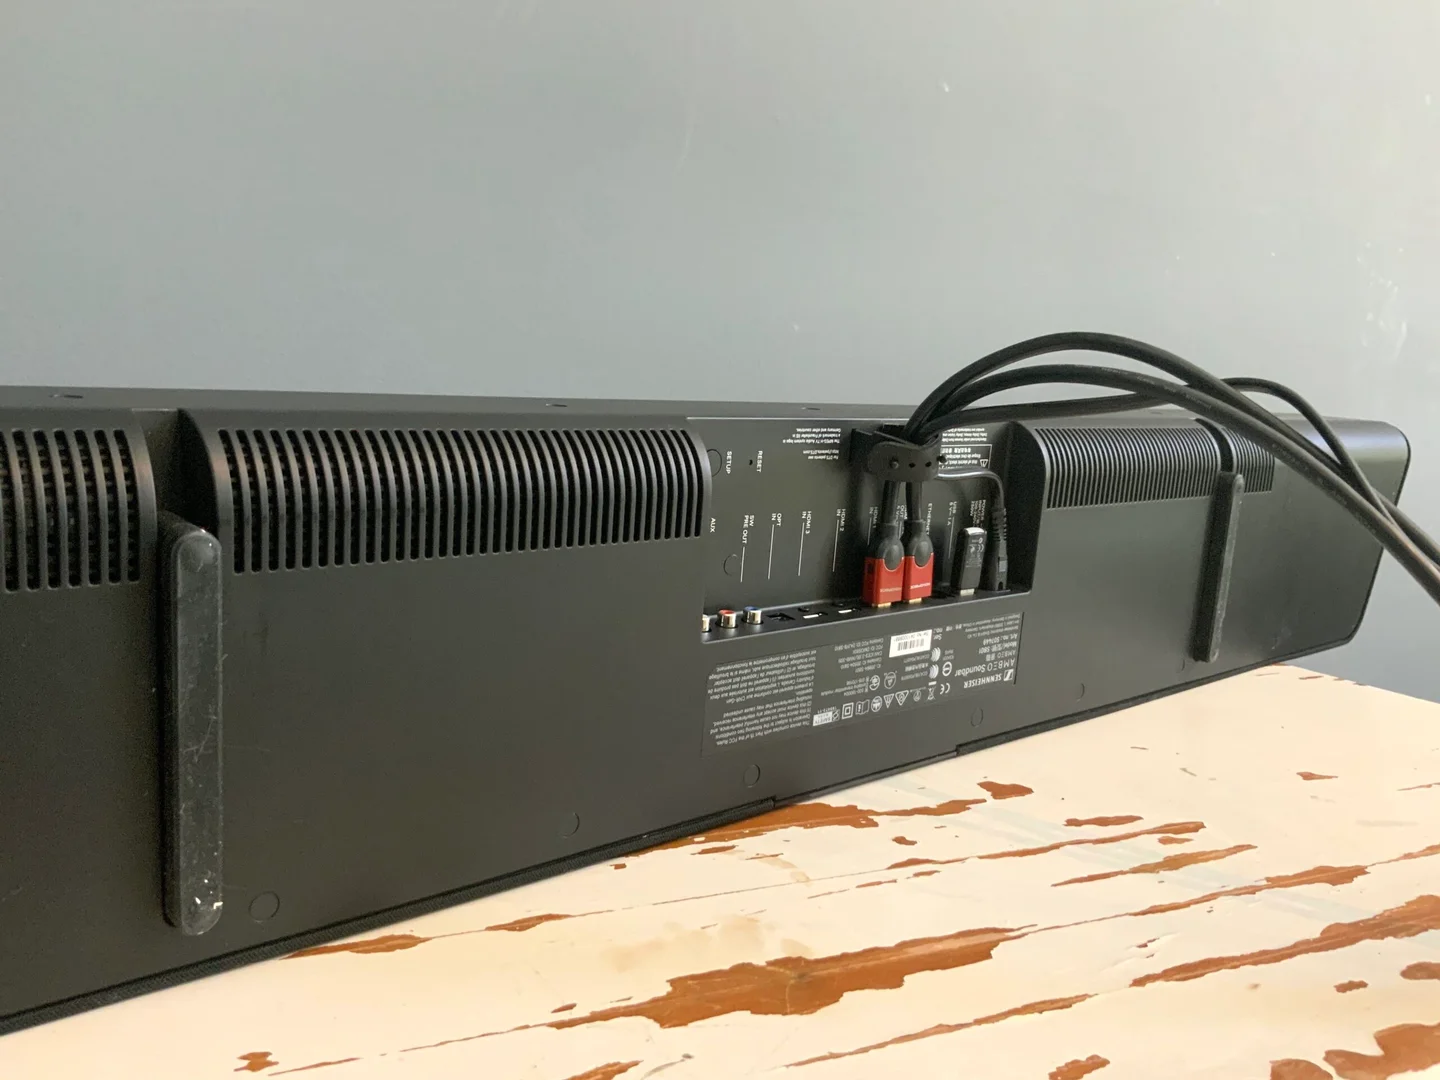 How Do I Connect My Soundbar To My Sanyo TV Through A Digital Audio Cable